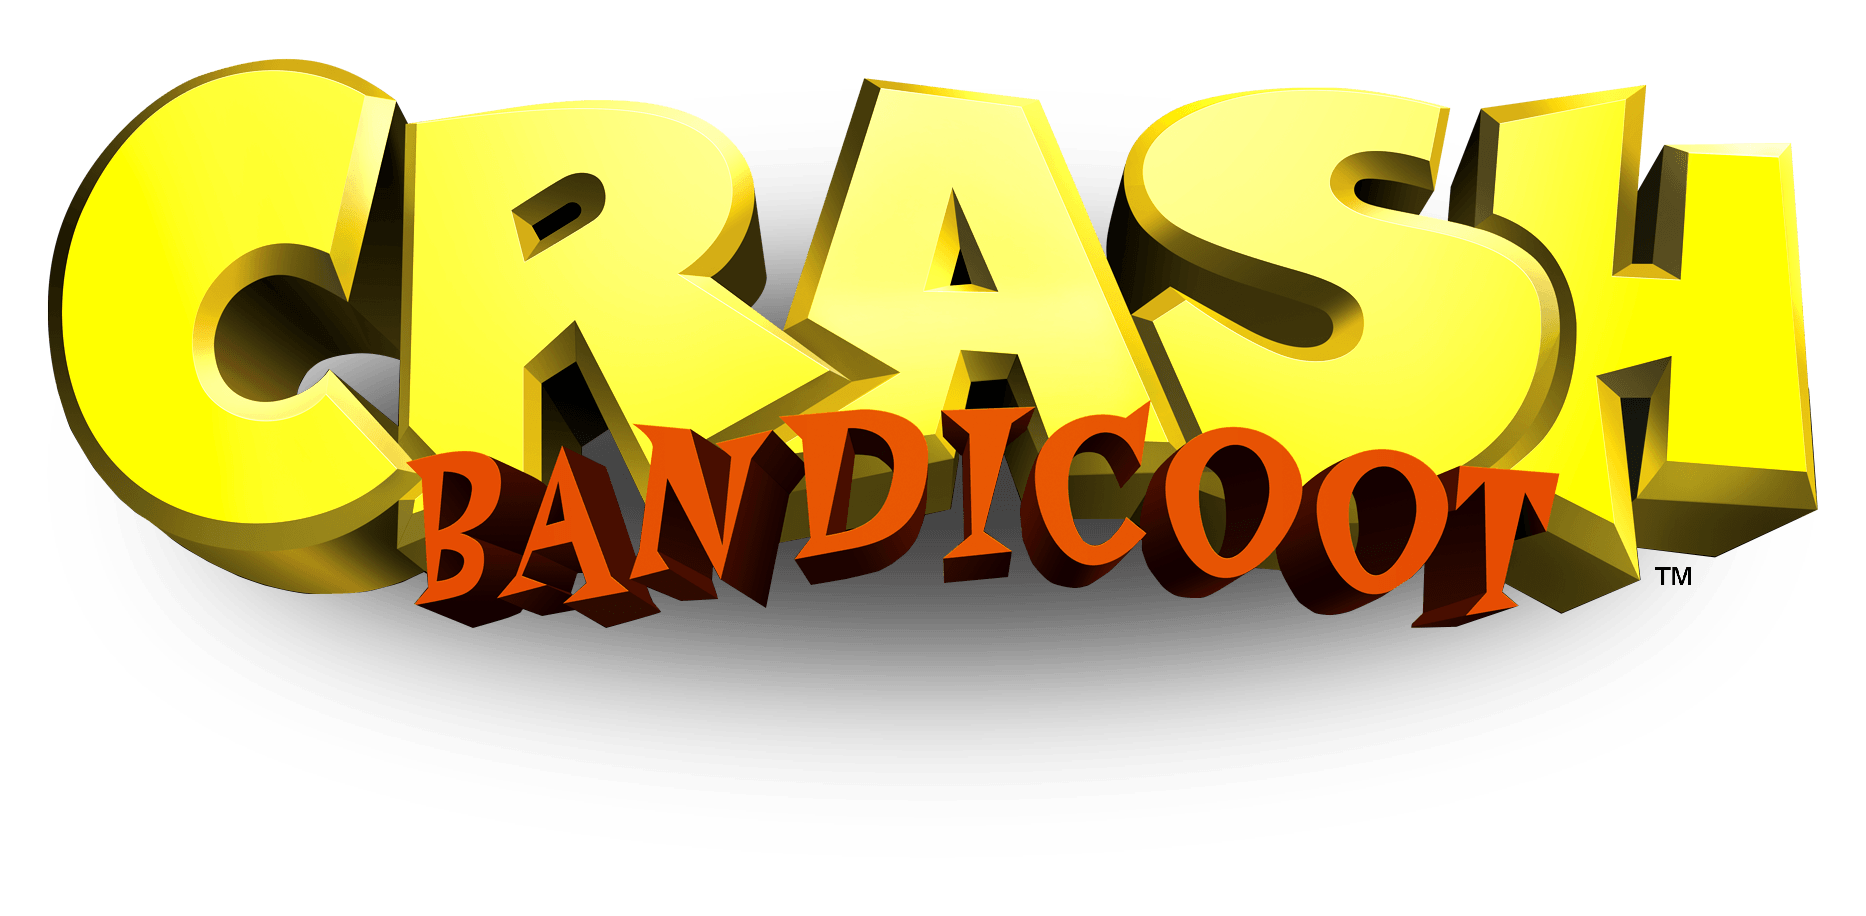 Kecelakaan Bandicoot Logo PNG Gambar Latar Belakang